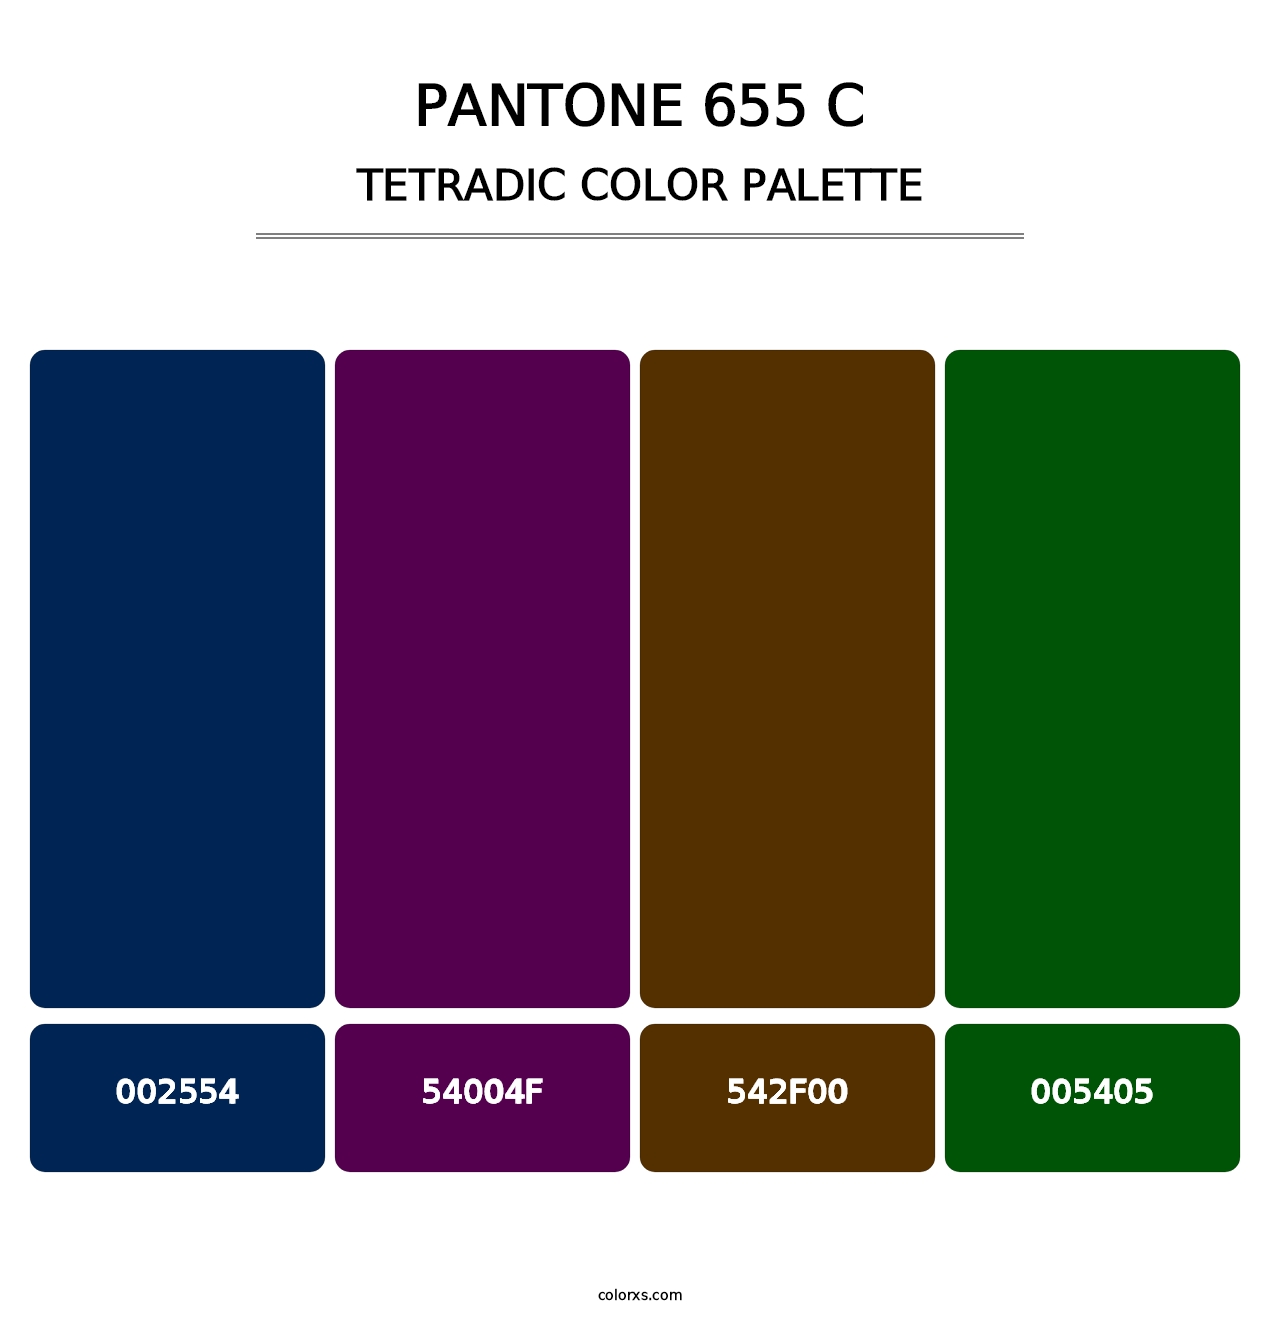 PANTONE 655 C - Tetradic Color Palette